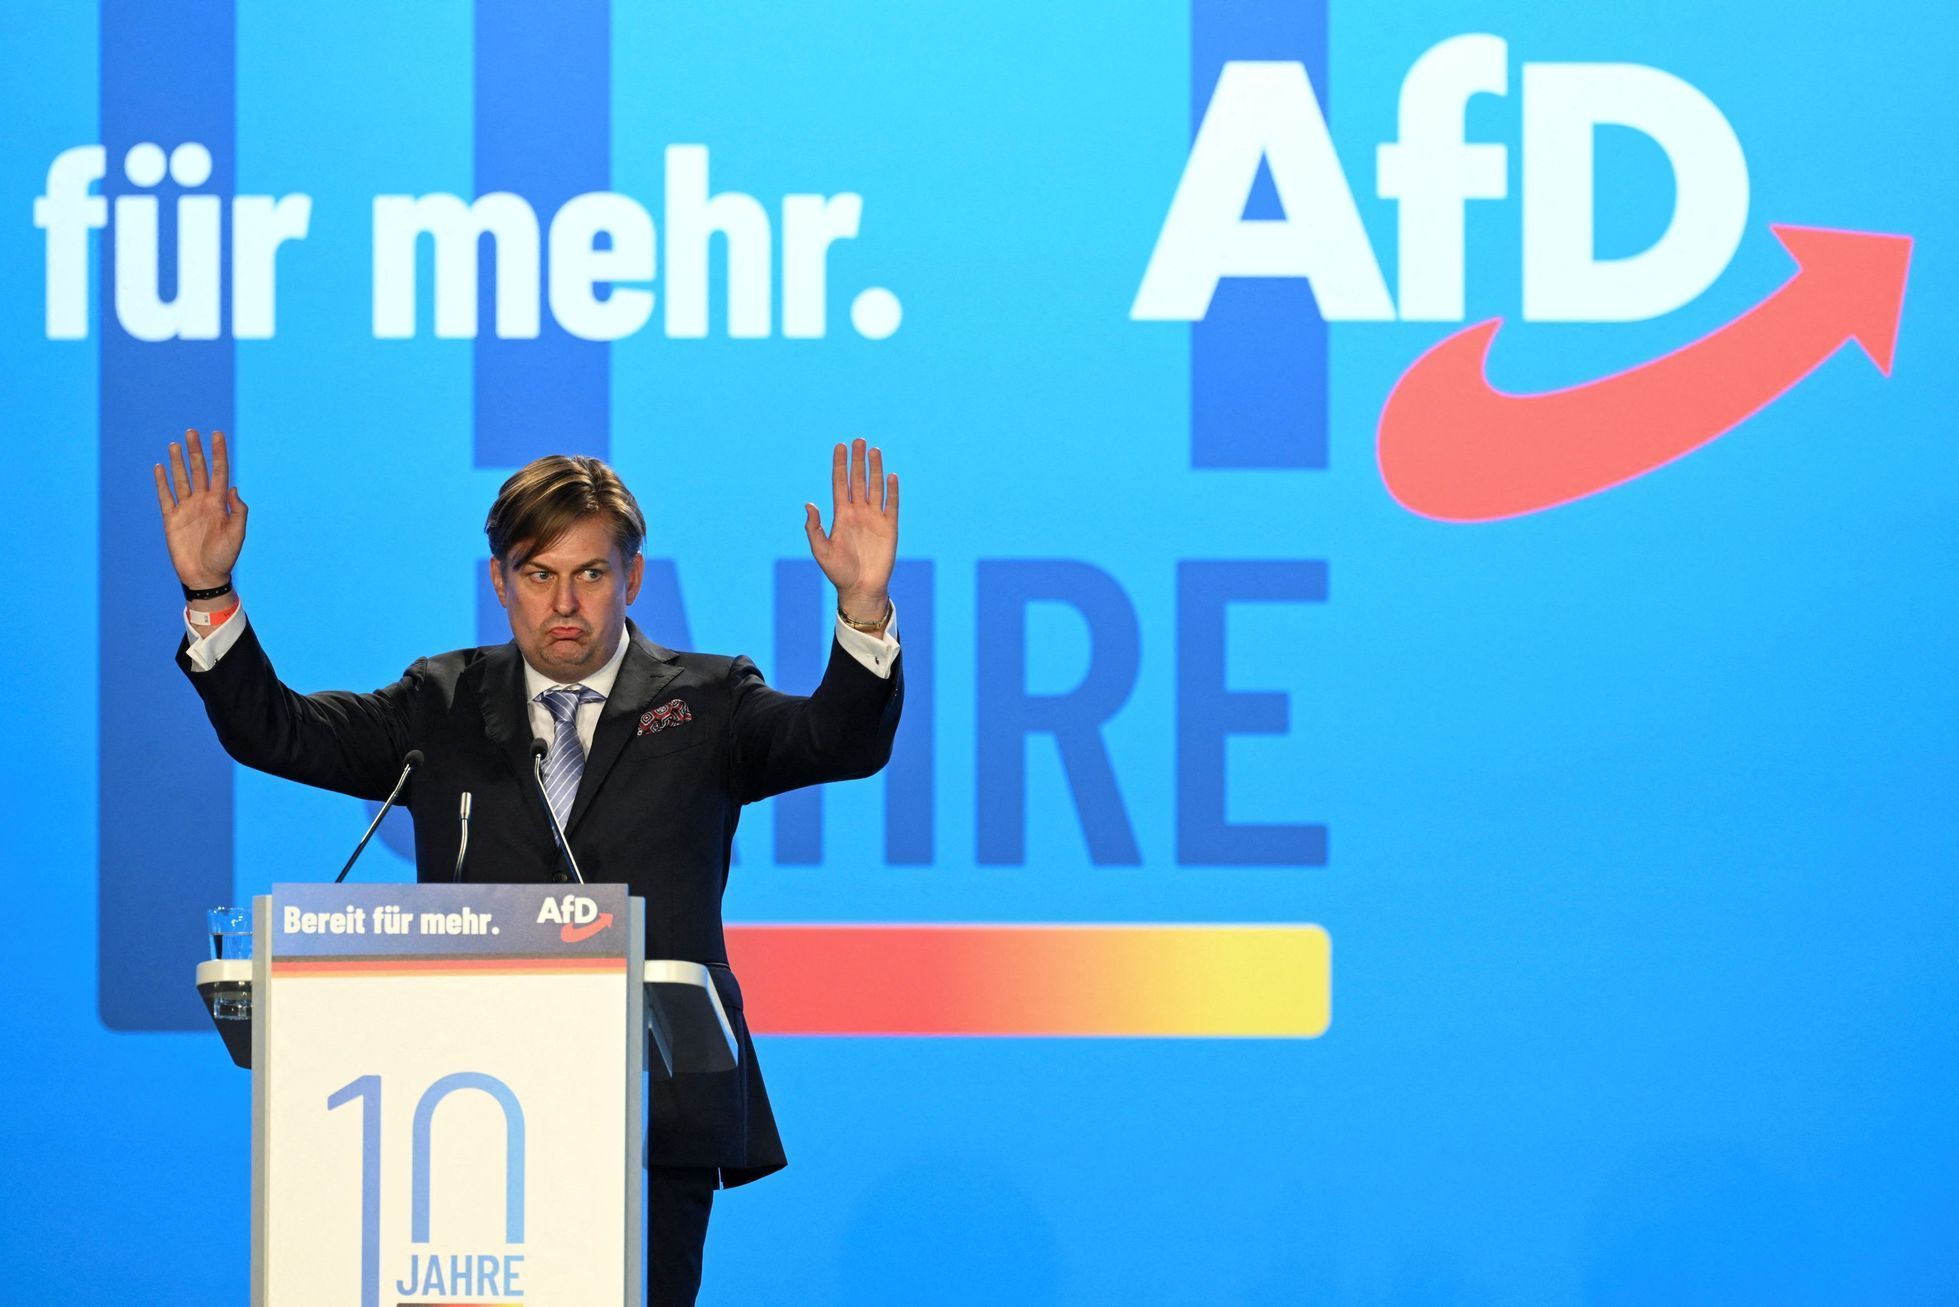 AfD alternativa pro německo evropské volby maxmilian krah